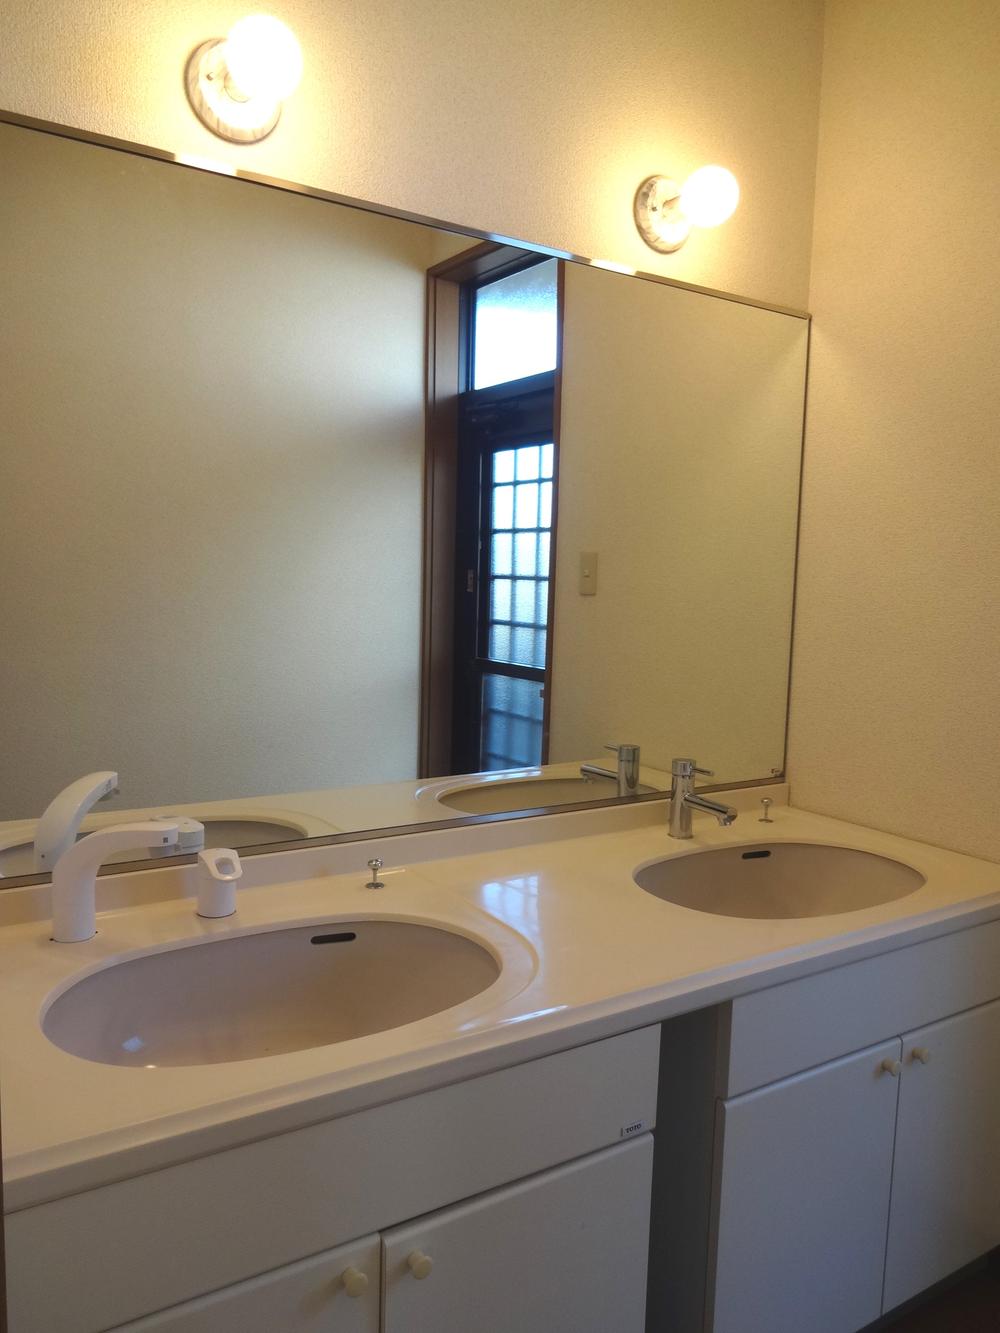 Wash basin, toilet. First floor lavatory (December 2013) Shooting